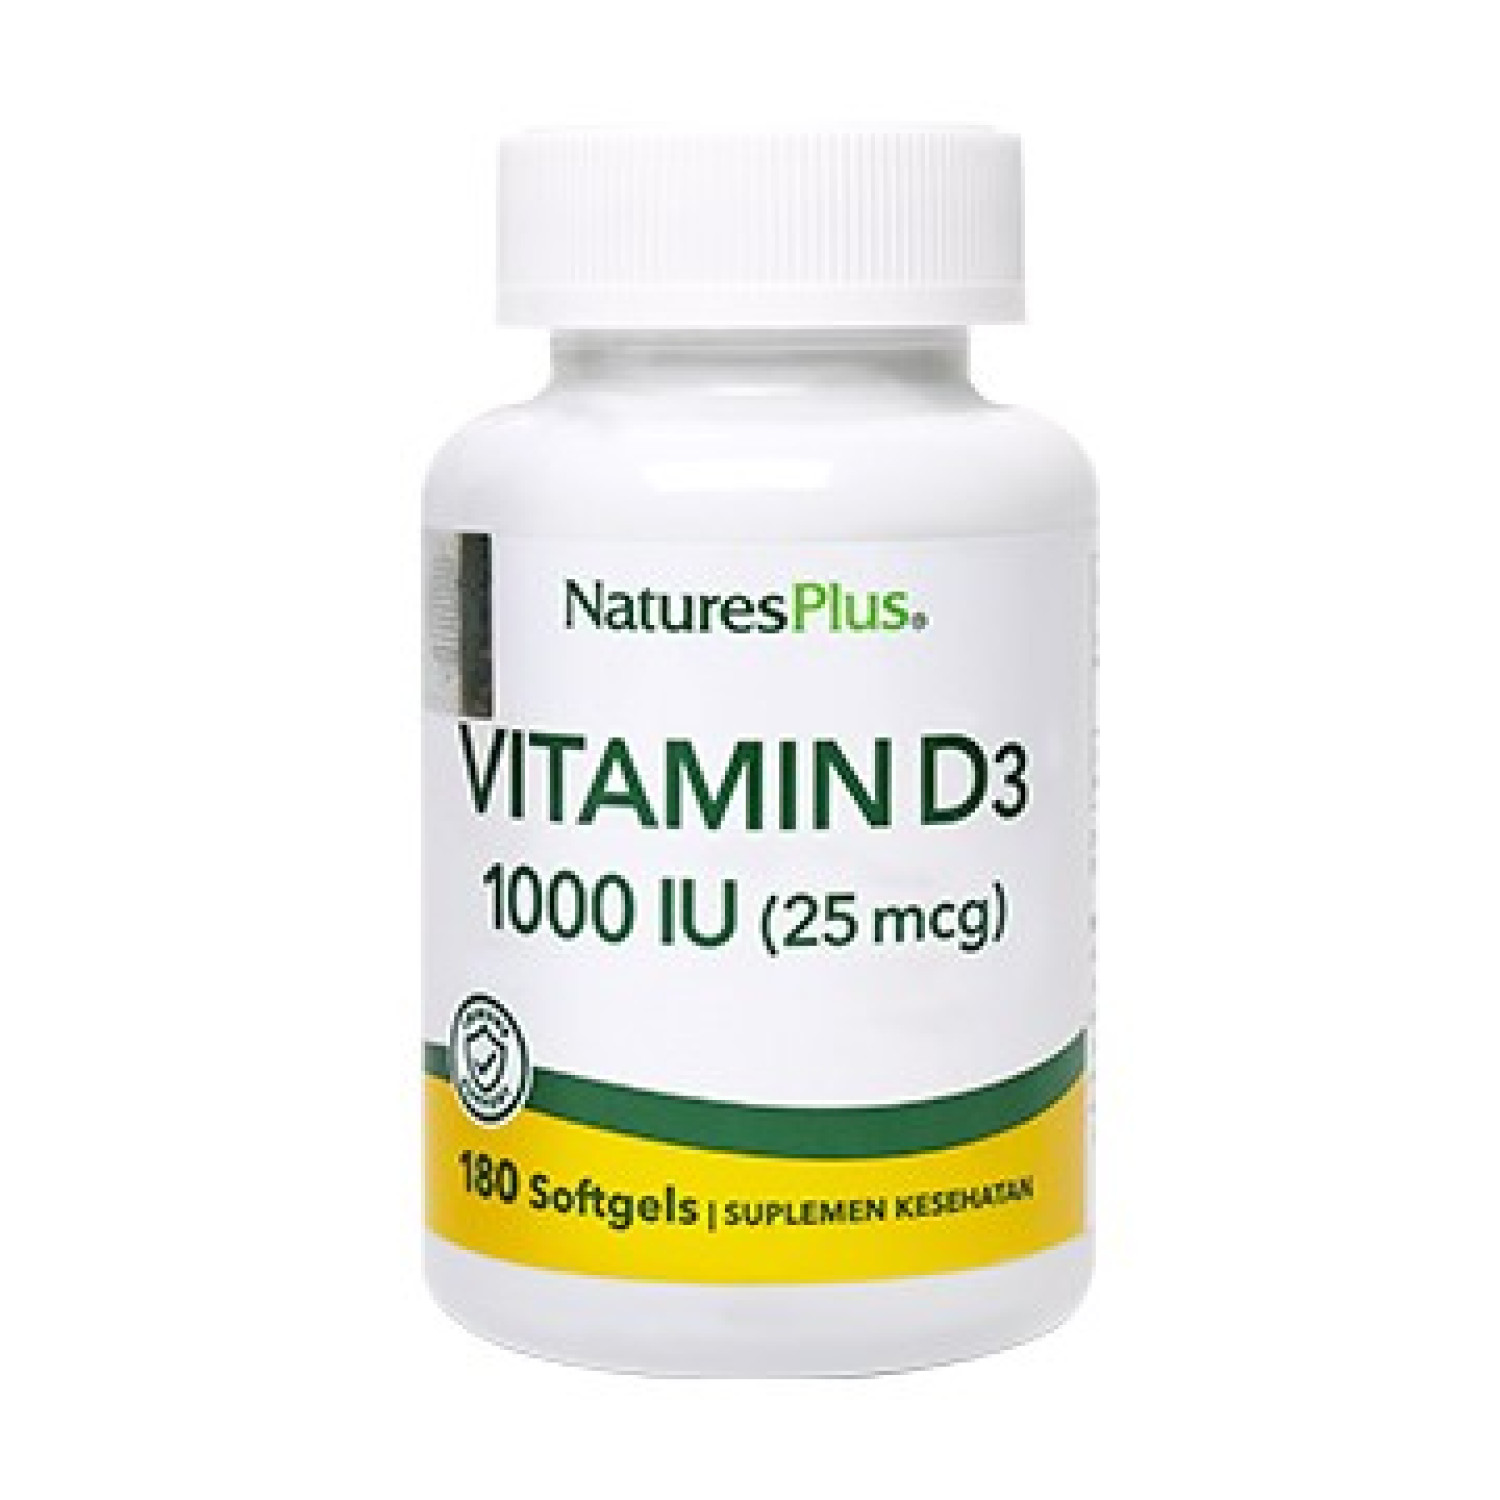 natures-plus-vitamin-d3-1000-iu-180-softgels-exp-date-5-24-6566b30dc80e9.jpeg